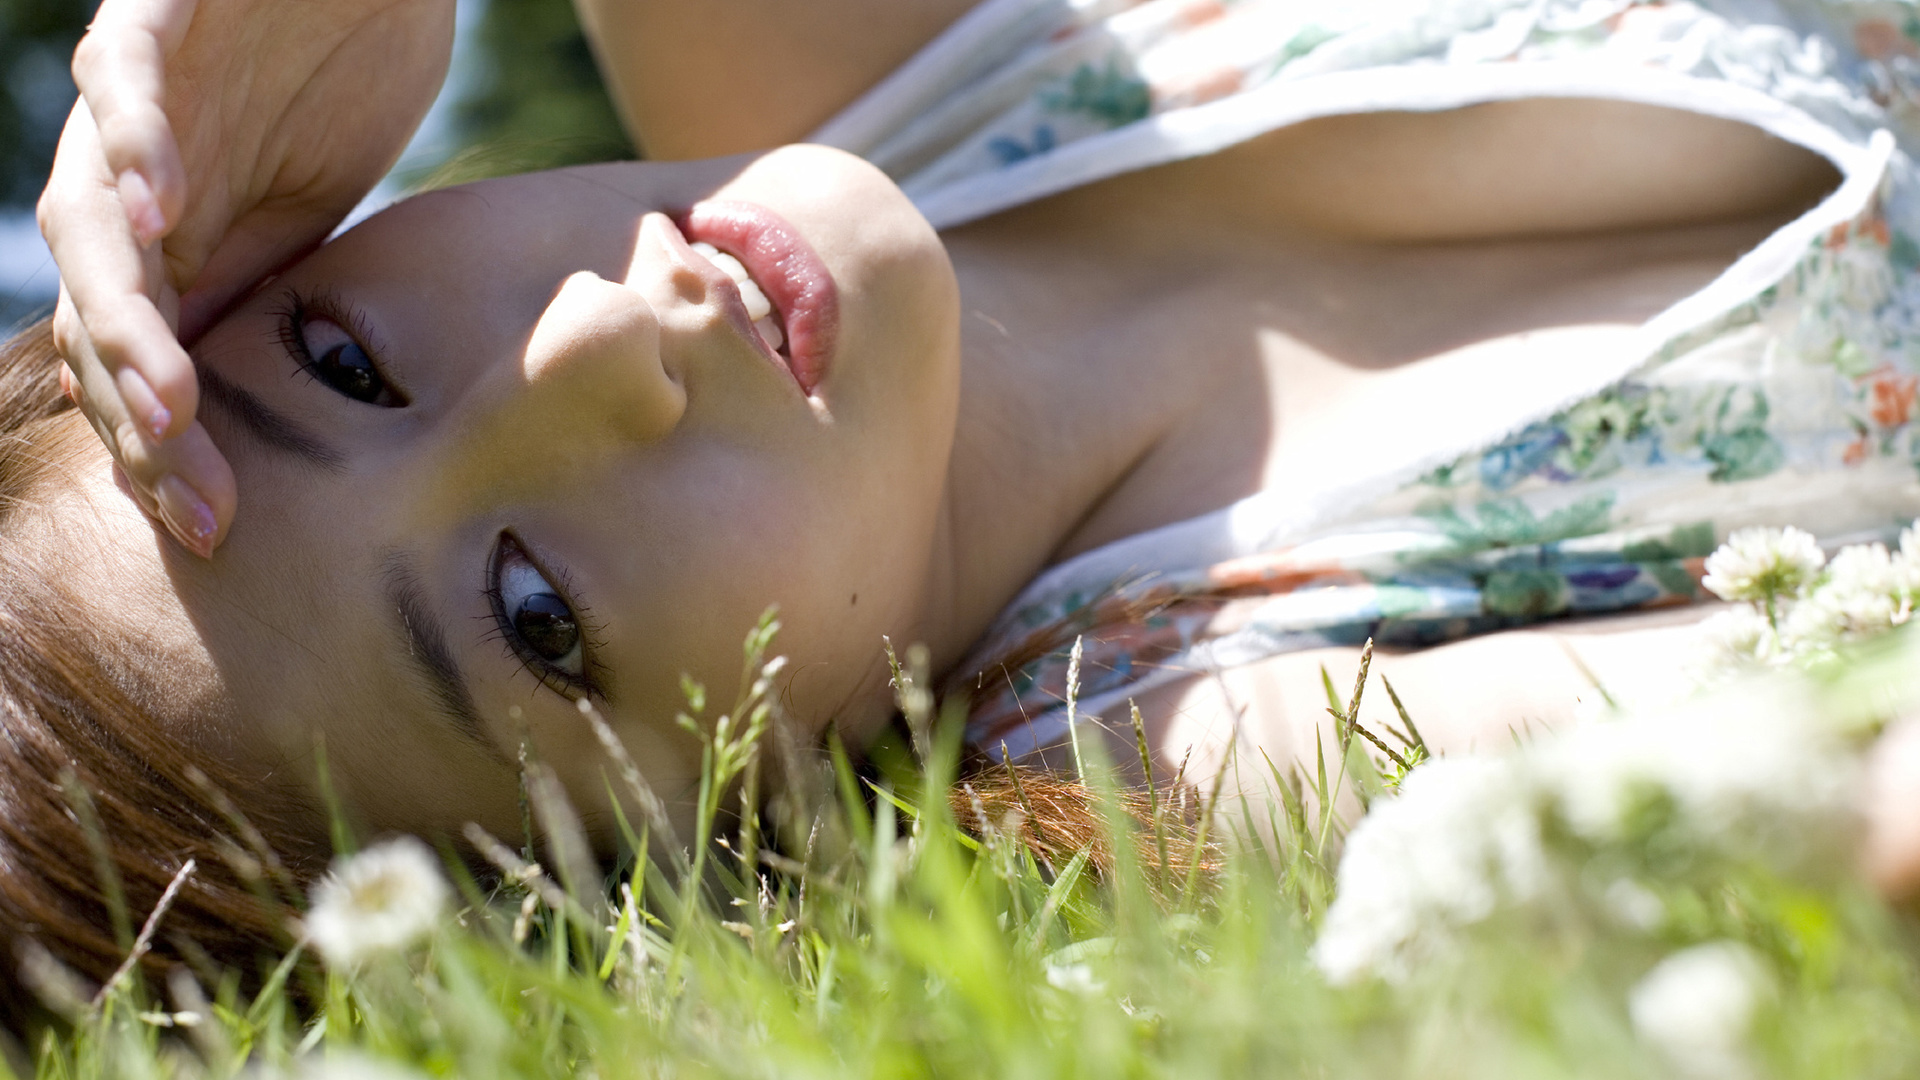 yumi sugimoto, actress, model, girl, asian, japanese, beauty, cute, close up, grass, field, nature, outside, outdoor